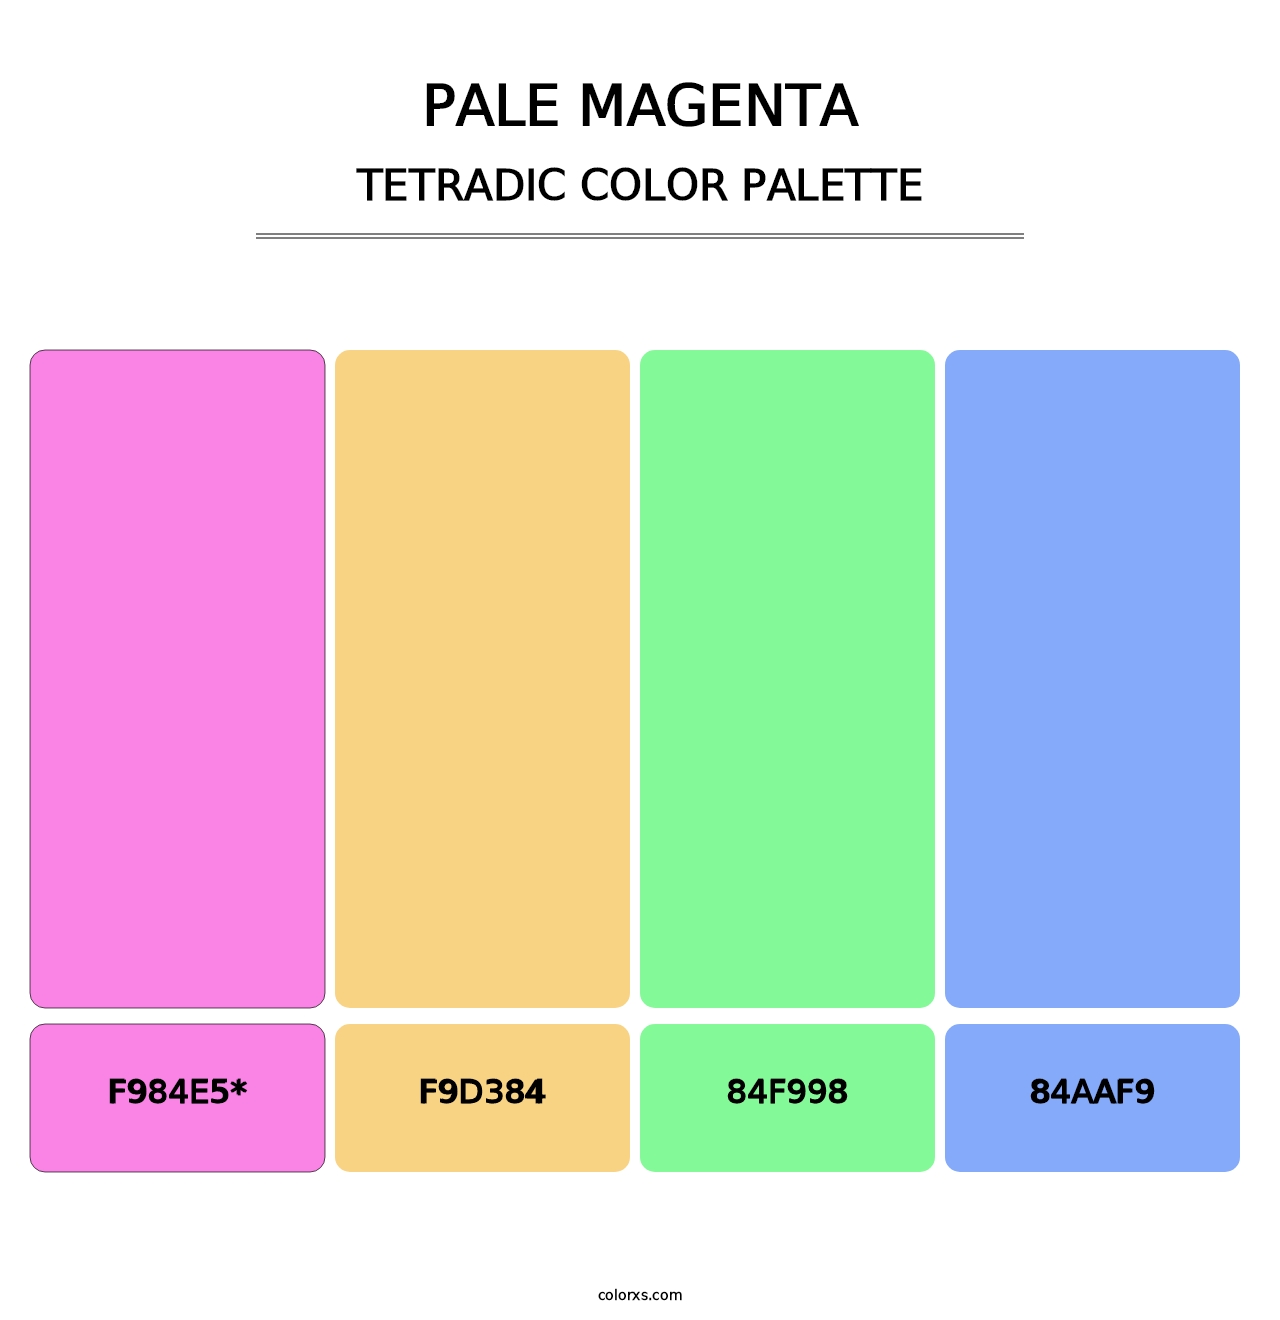 Pale Magenta - Tetradic Color Palette